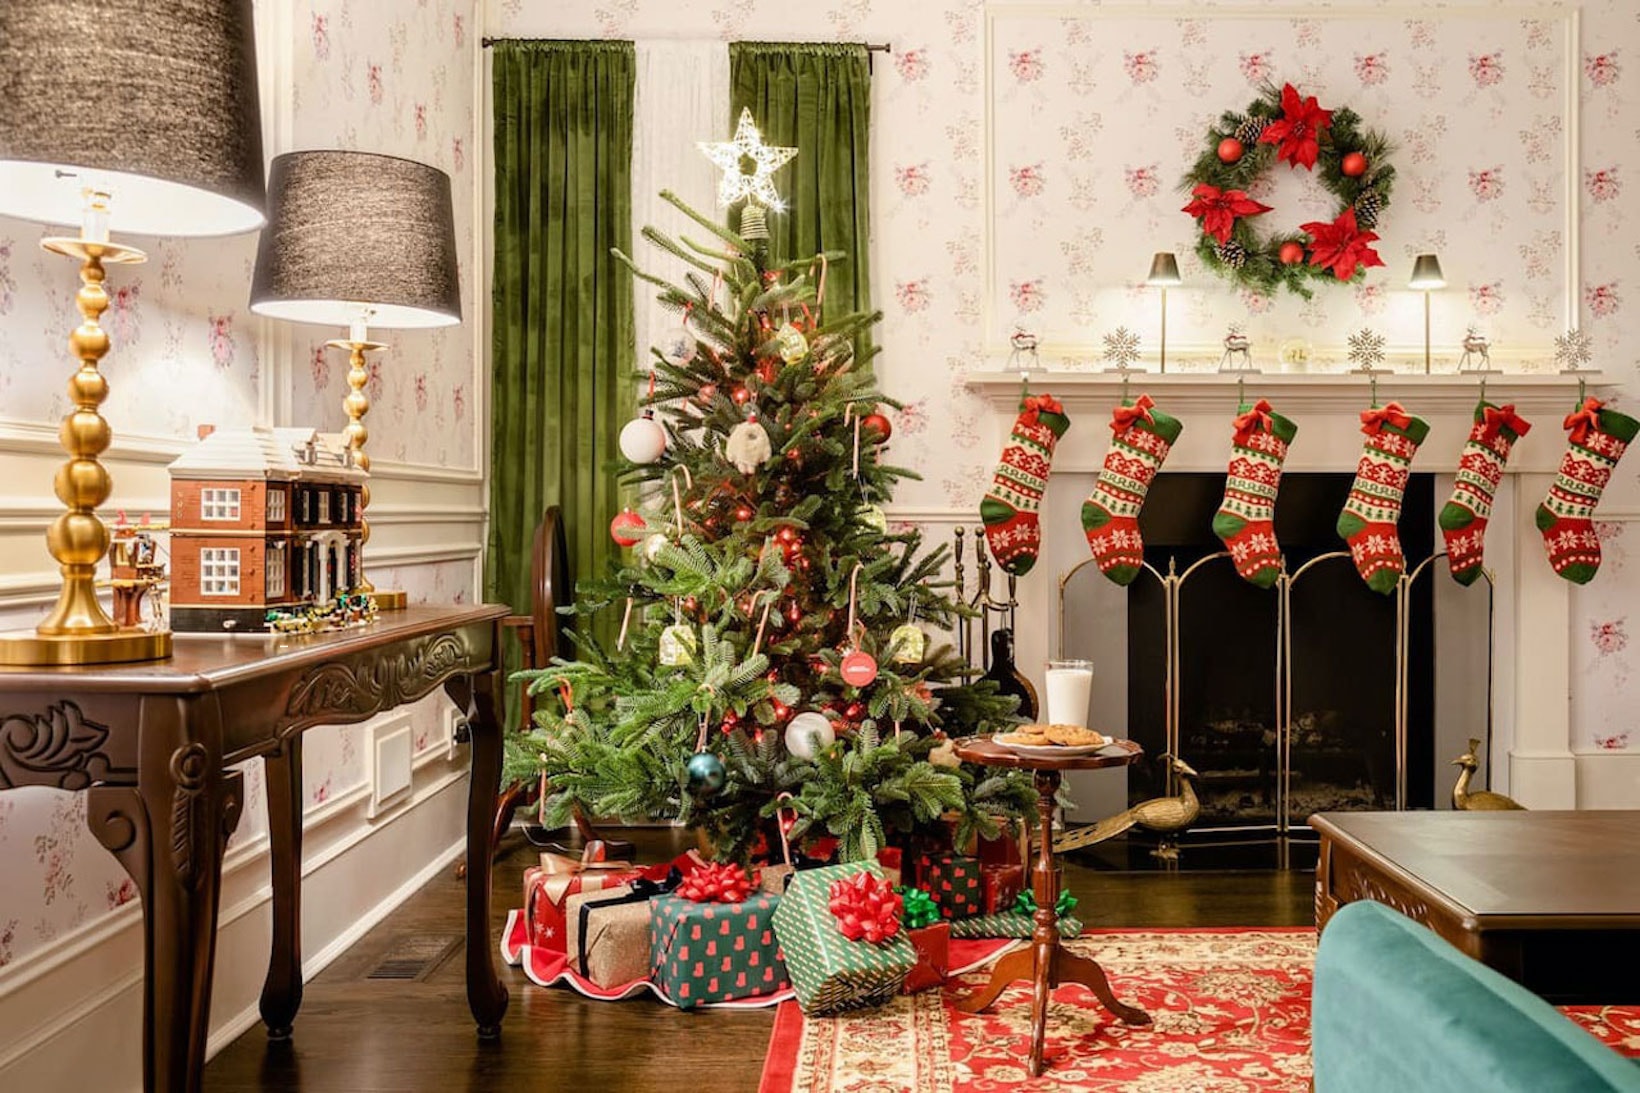 Original Home Alone House Airbnb Rental Christmas